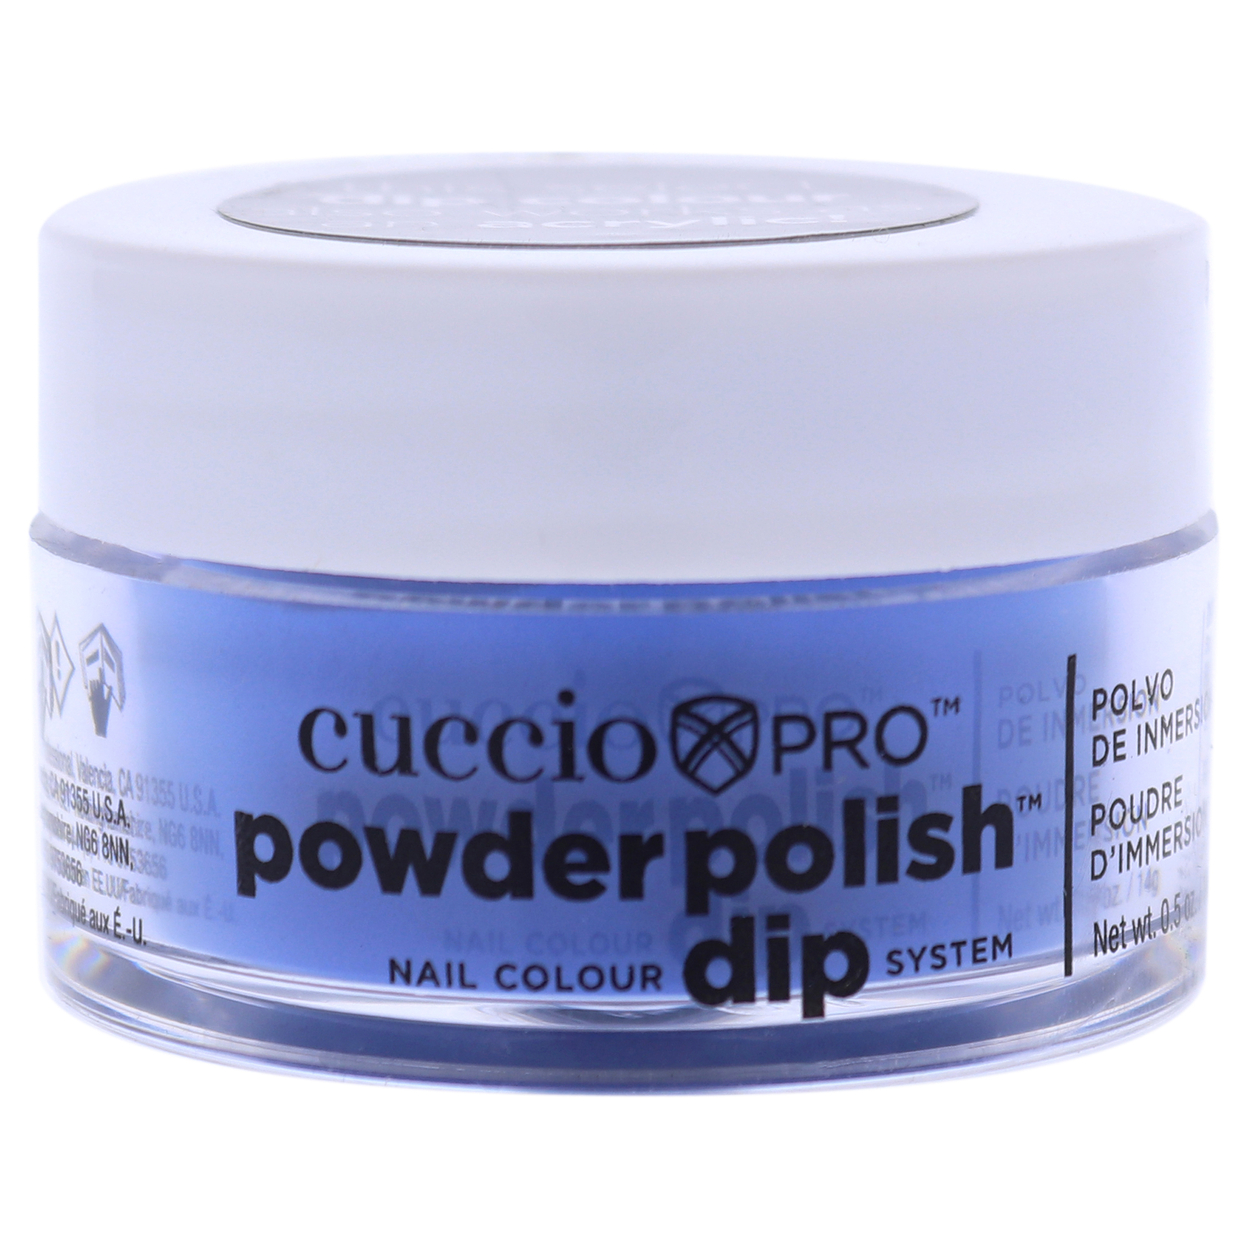 Cuccio Colour Pro Powder Polish Nail Colour Dip System - Ink Blue Nail Powder 0.5 Oz